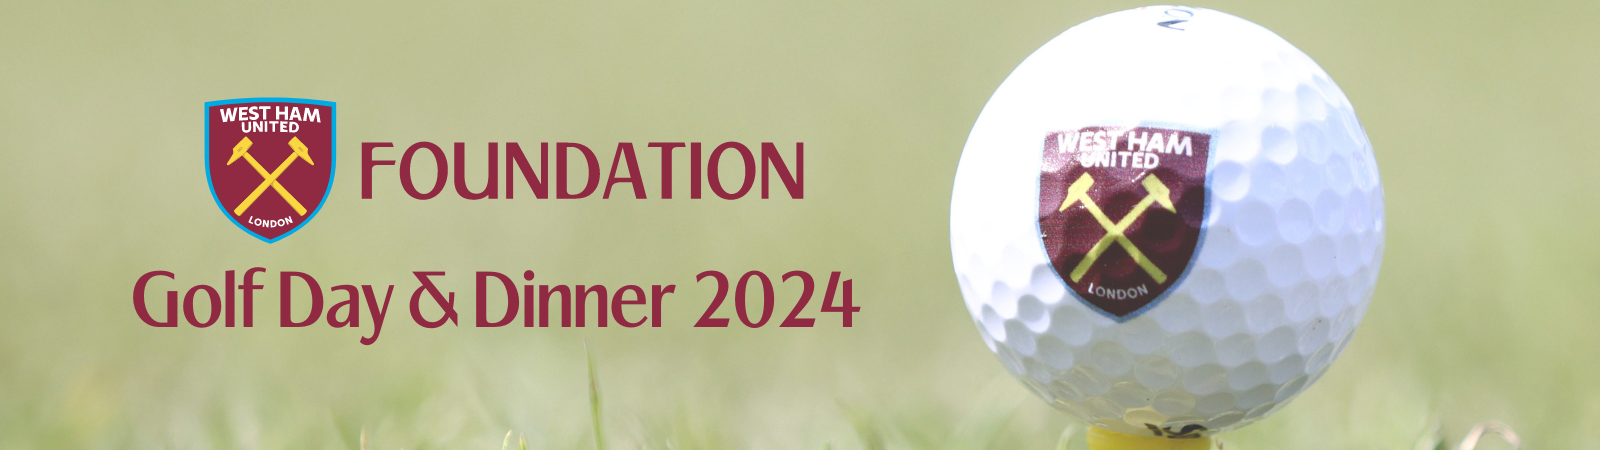 WHU Foundation Golf Day & Dinner 2024